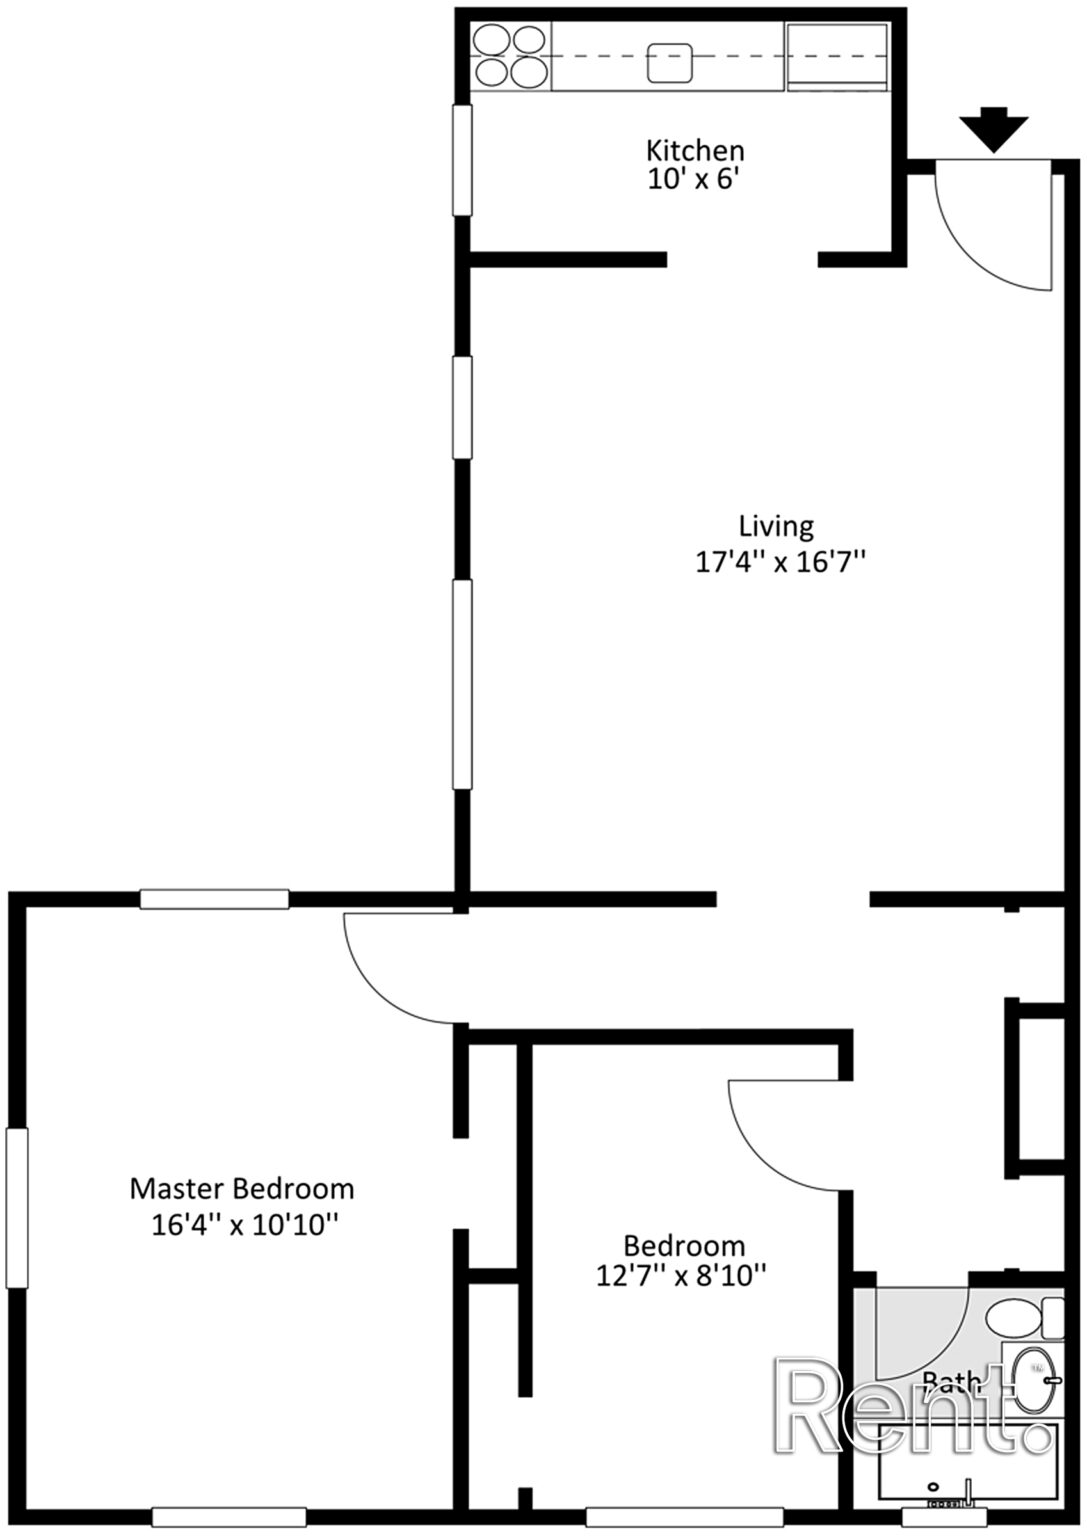 2 bedroom floor plan - 1 bathroom